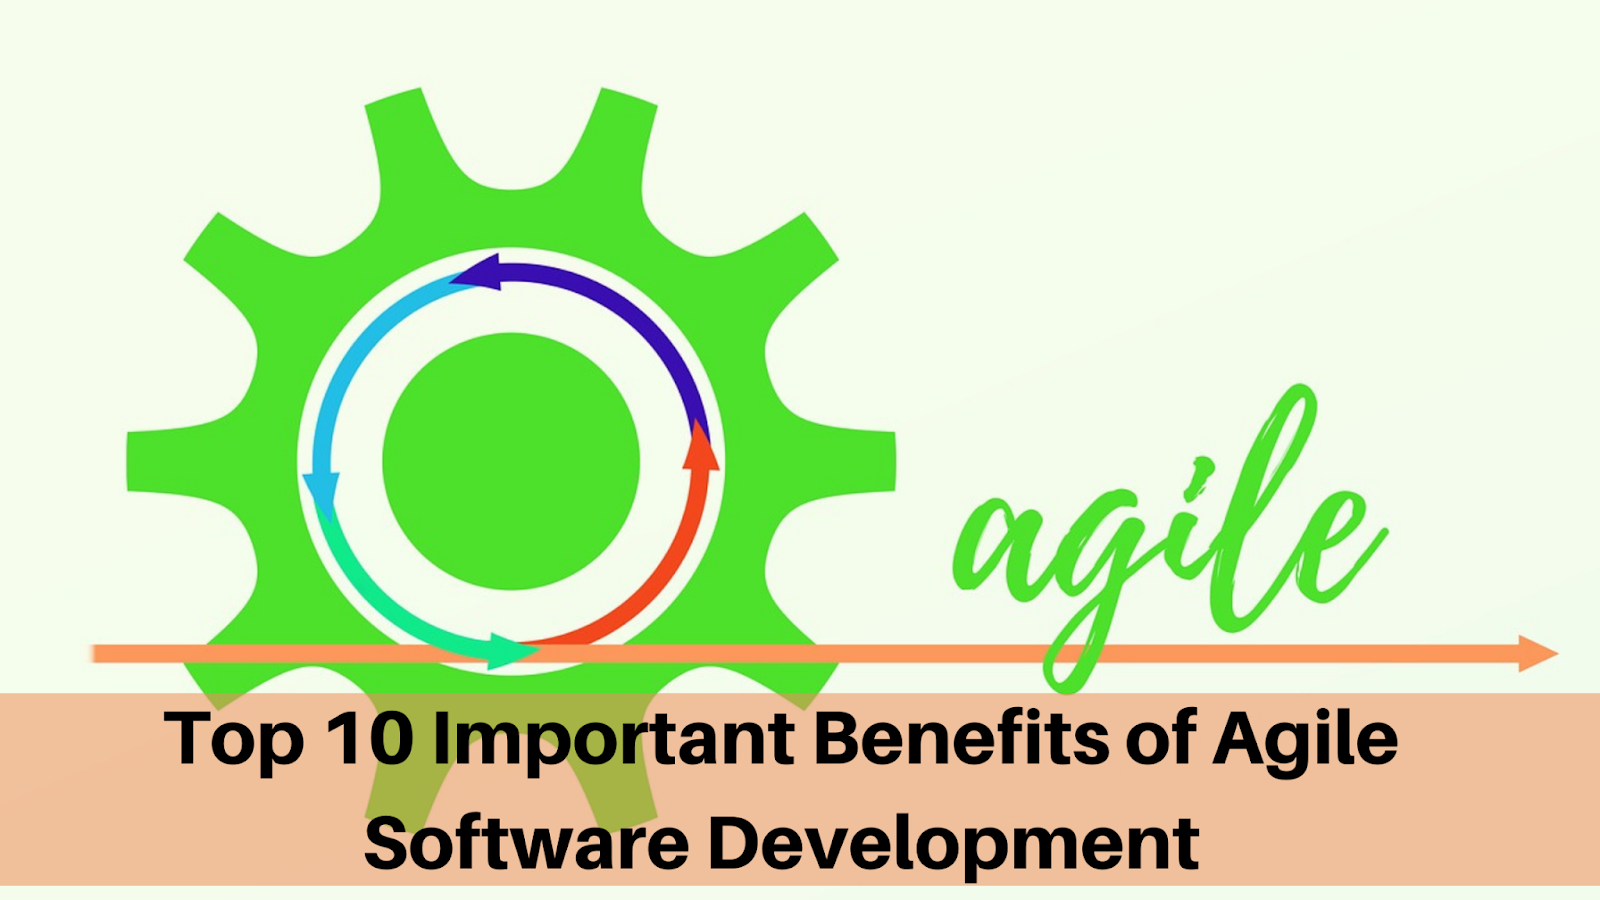 Top 10 Important Benefits of Agile Software Development